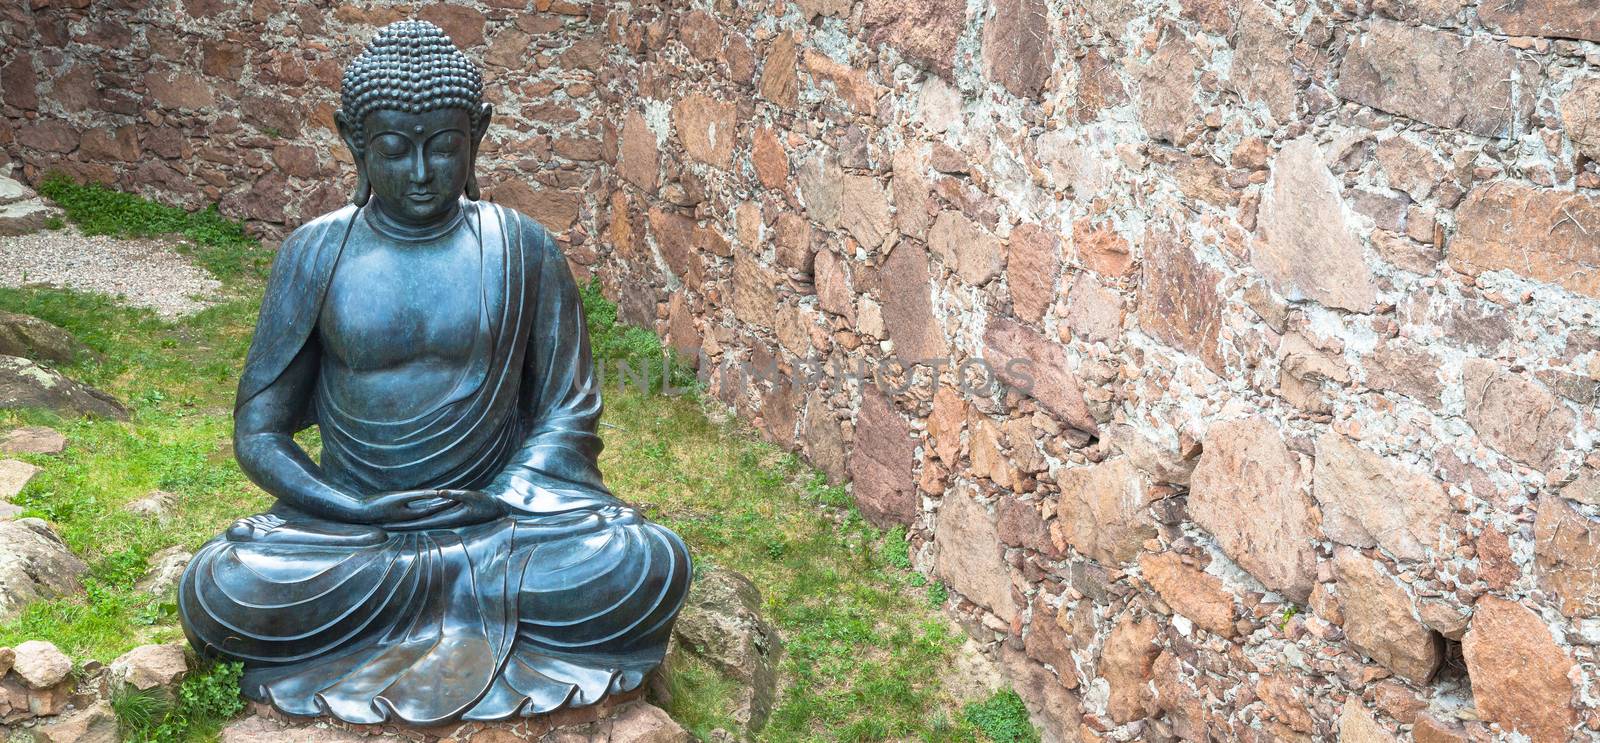 Meditating Buddha Statue, made of bronze. 19th Century, sitting stance, useful copyspace.